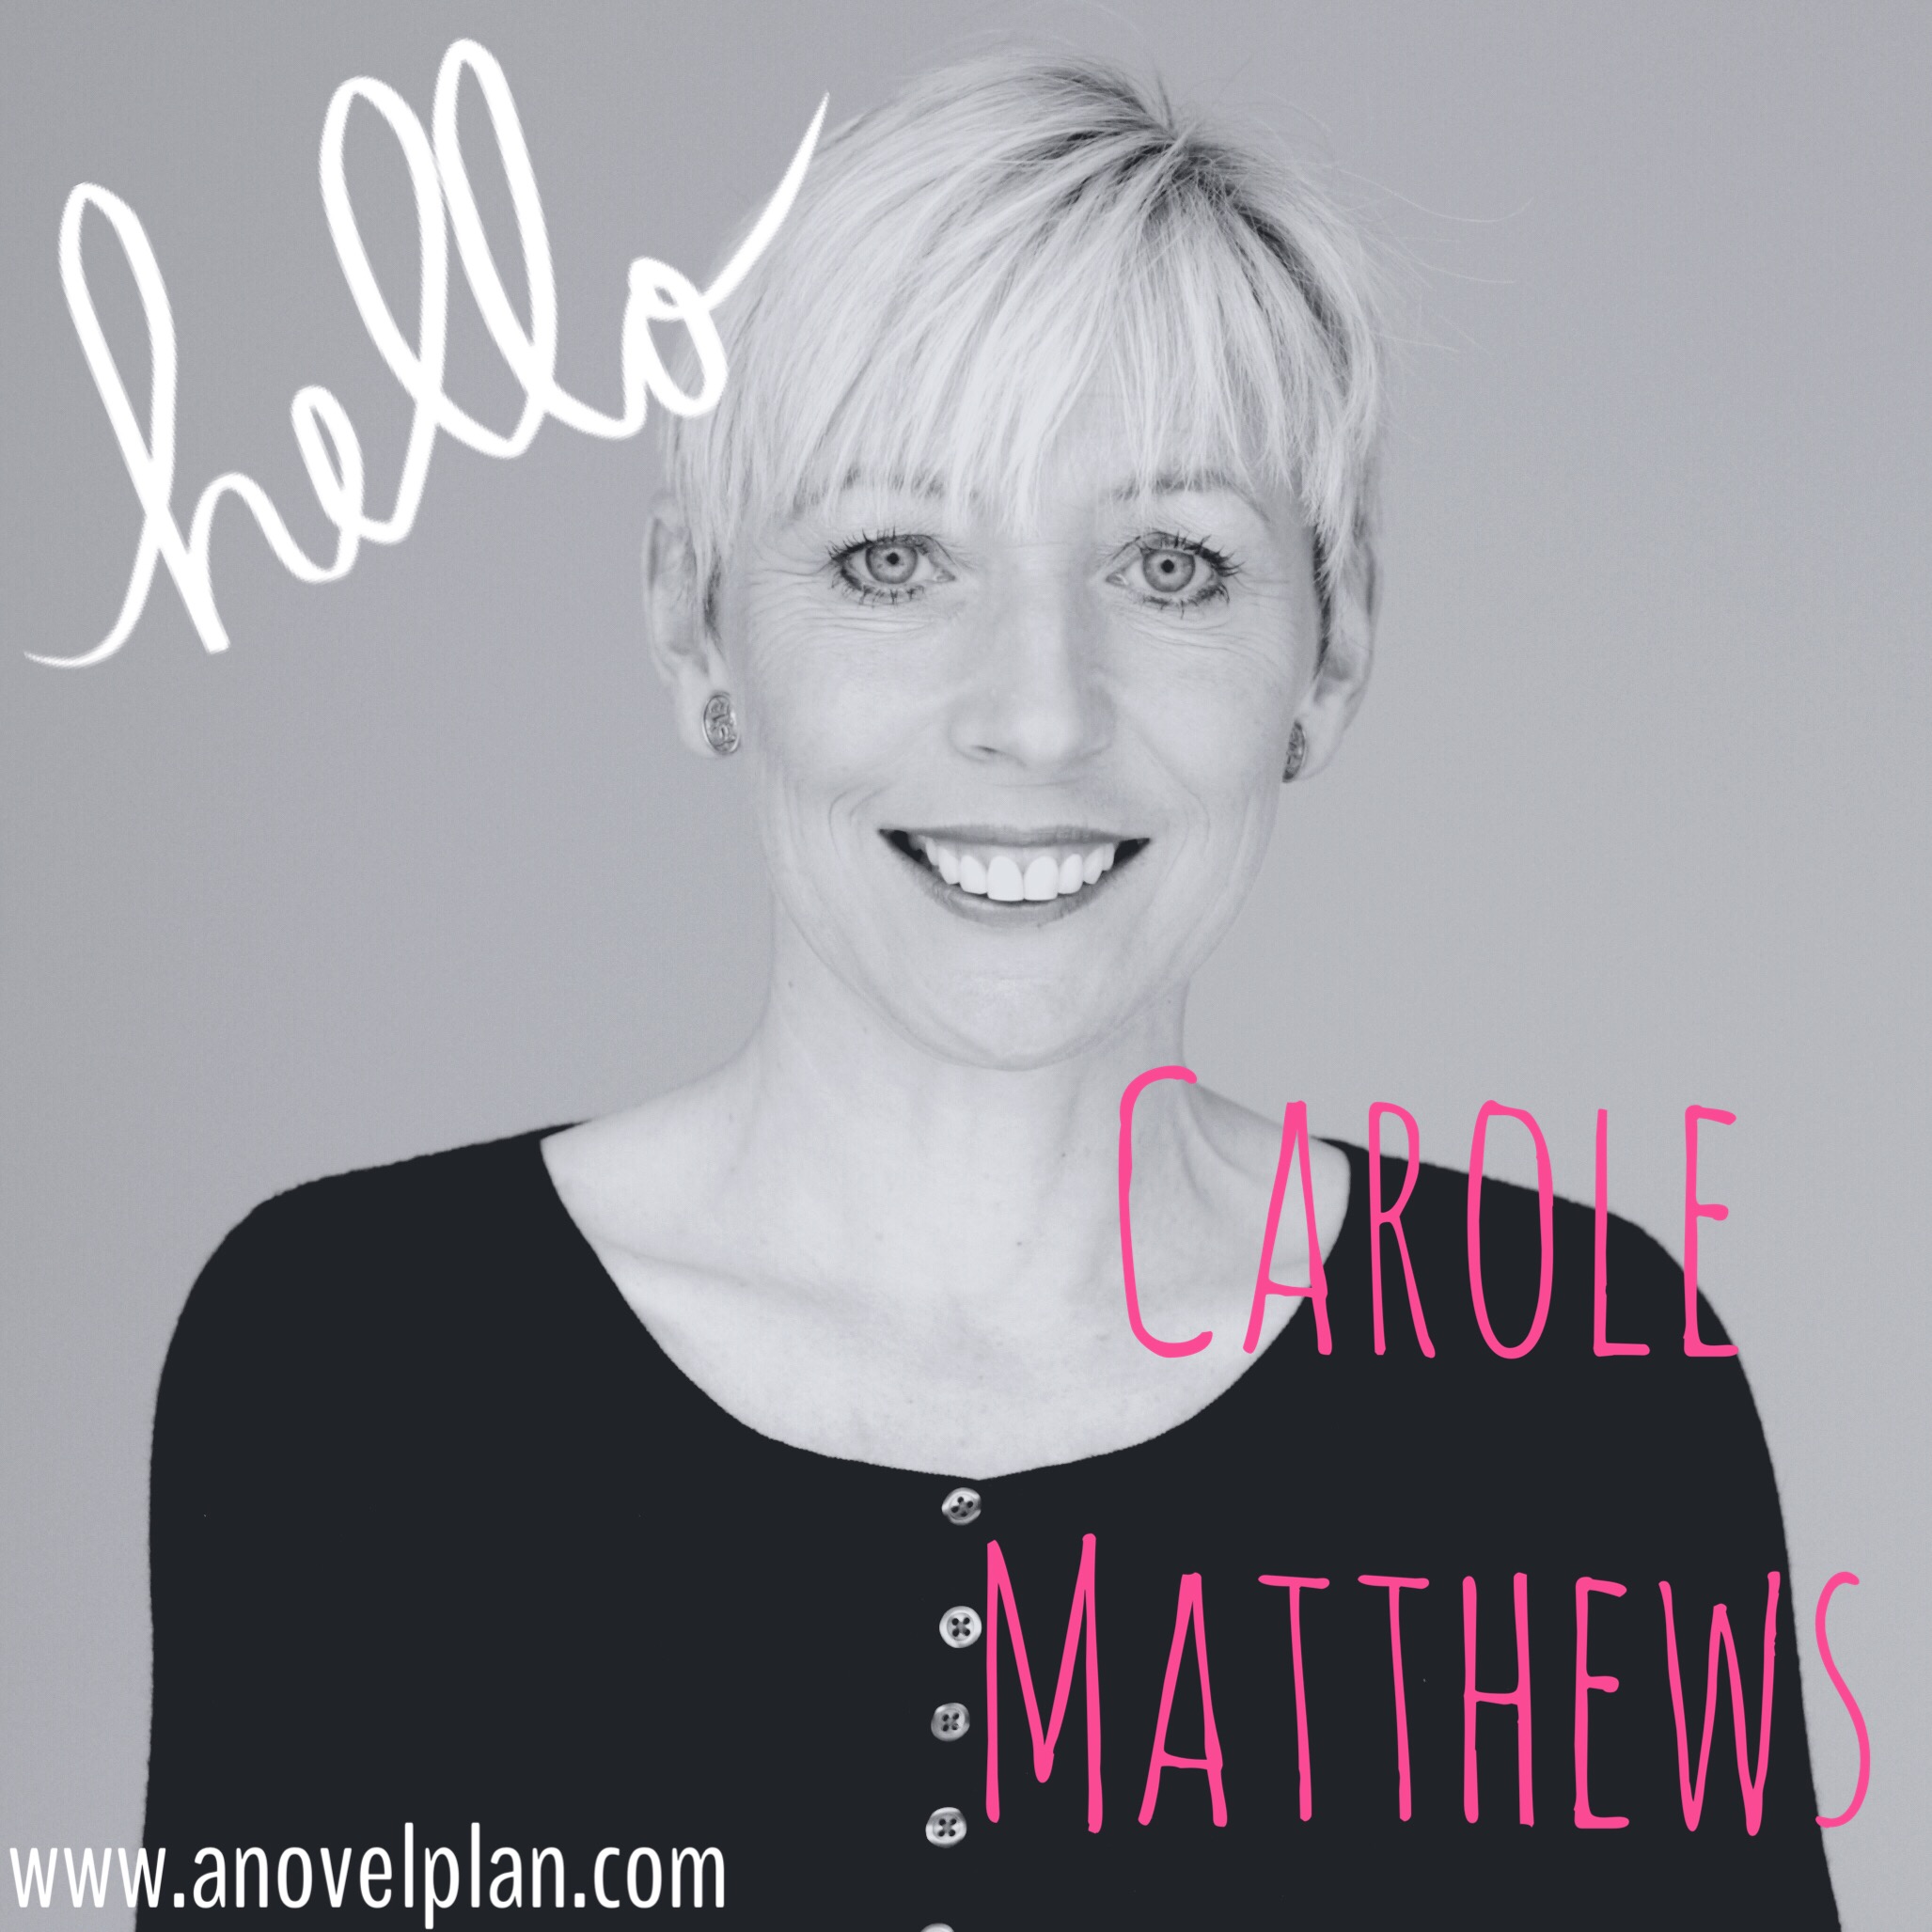 The Creative Process Behind Writing – Carole Matthews